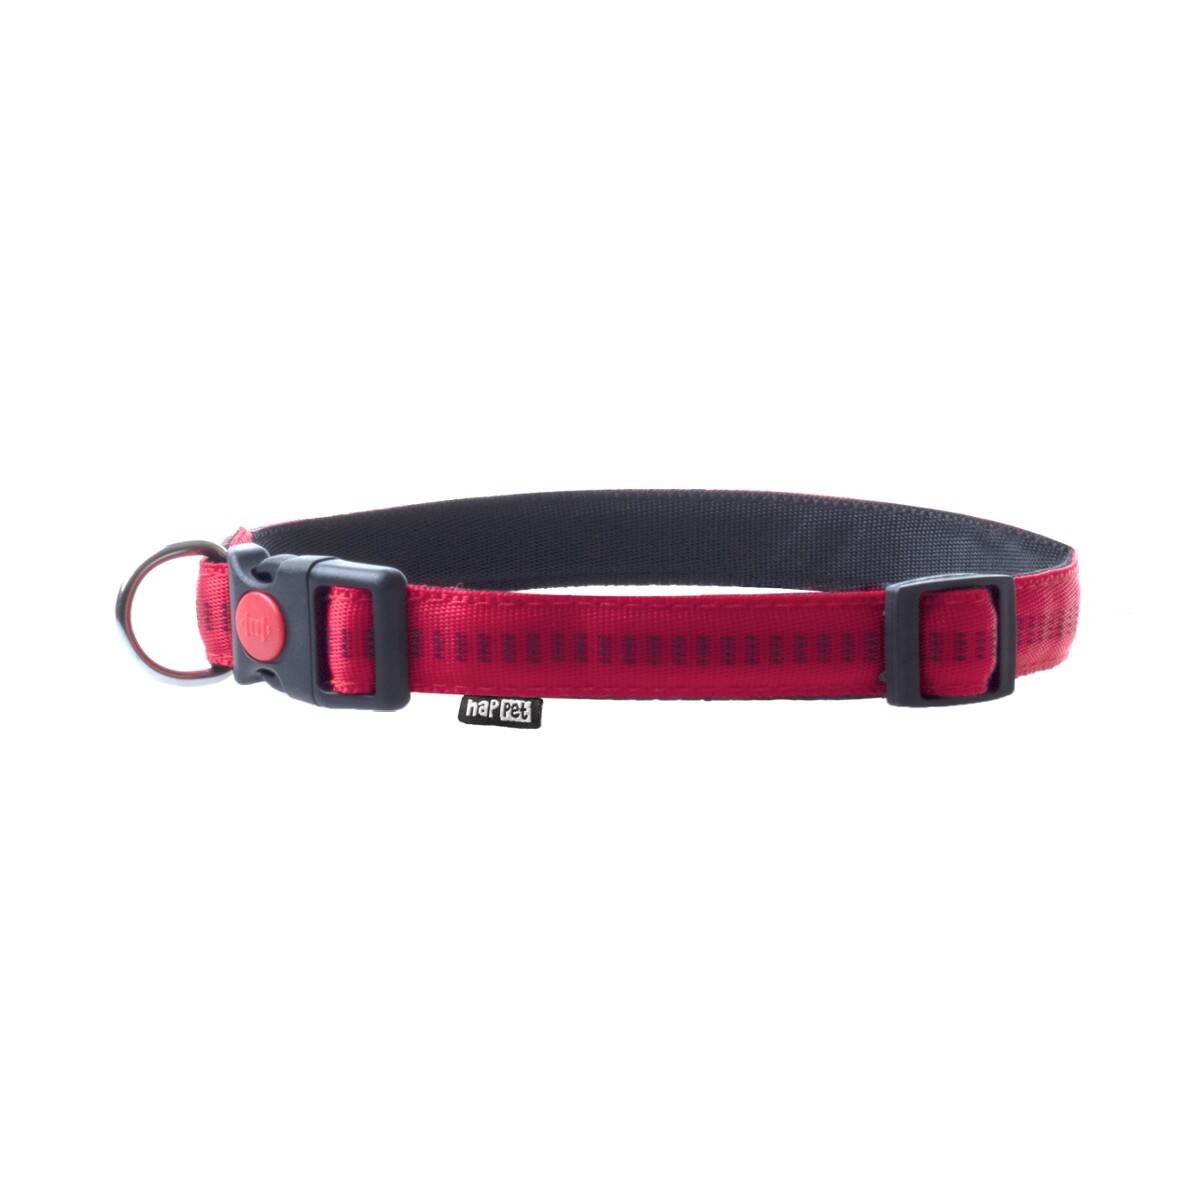 Collar L / Soft Style / Red - Happet JC23